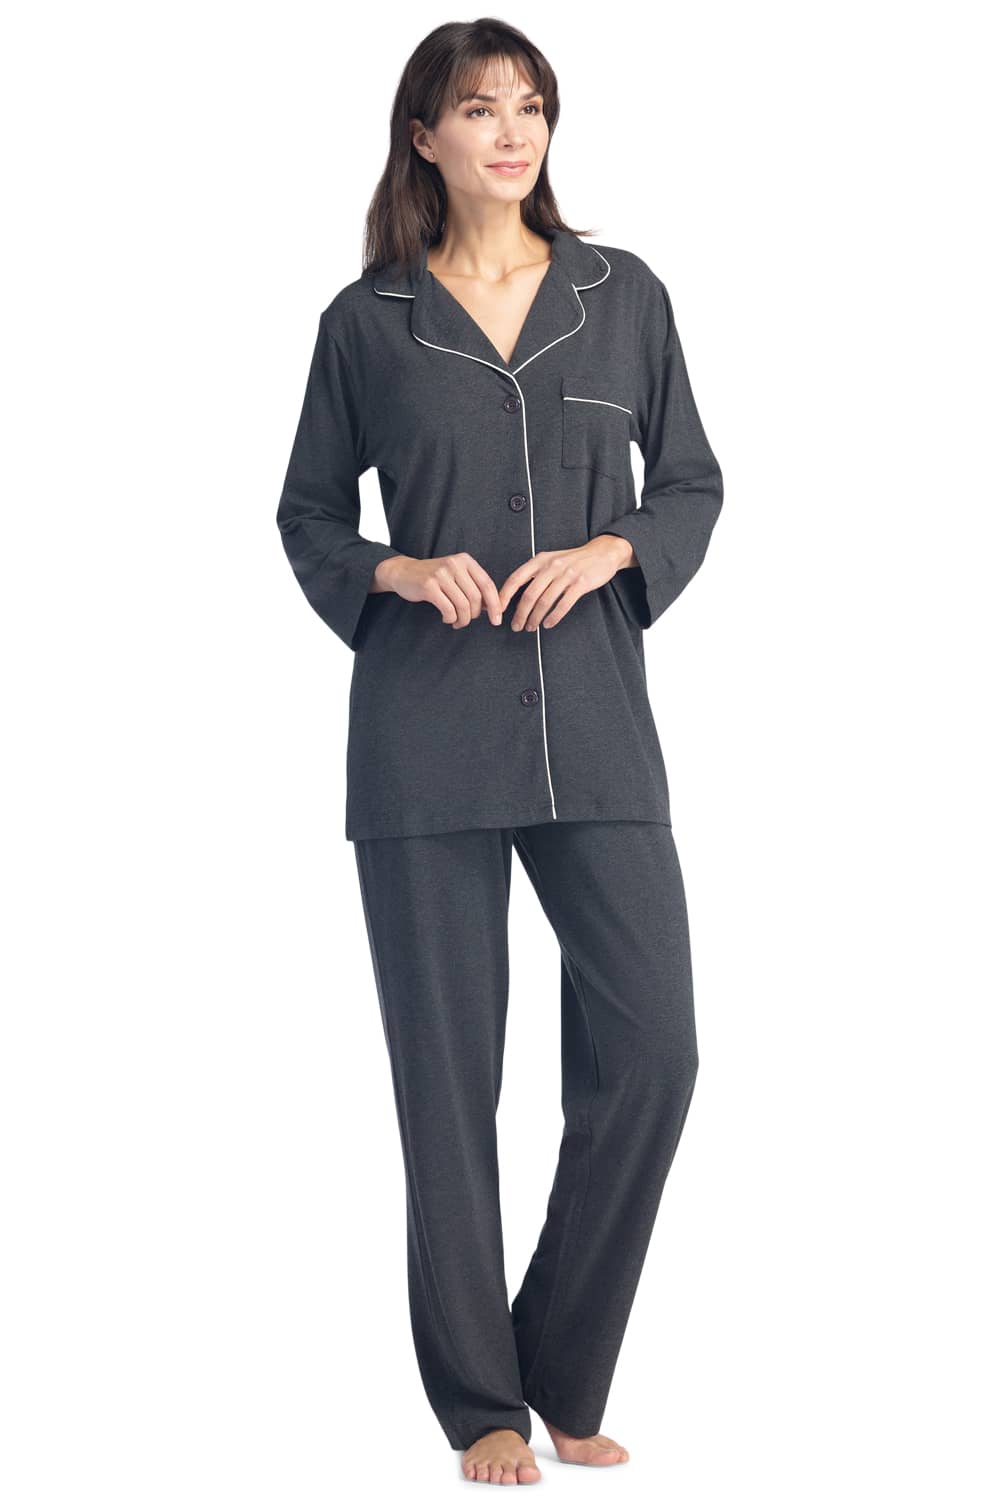  Femofit - Women's Pajama Sets / Women's Sleepwear: Clothing,  Shoes & Accessories